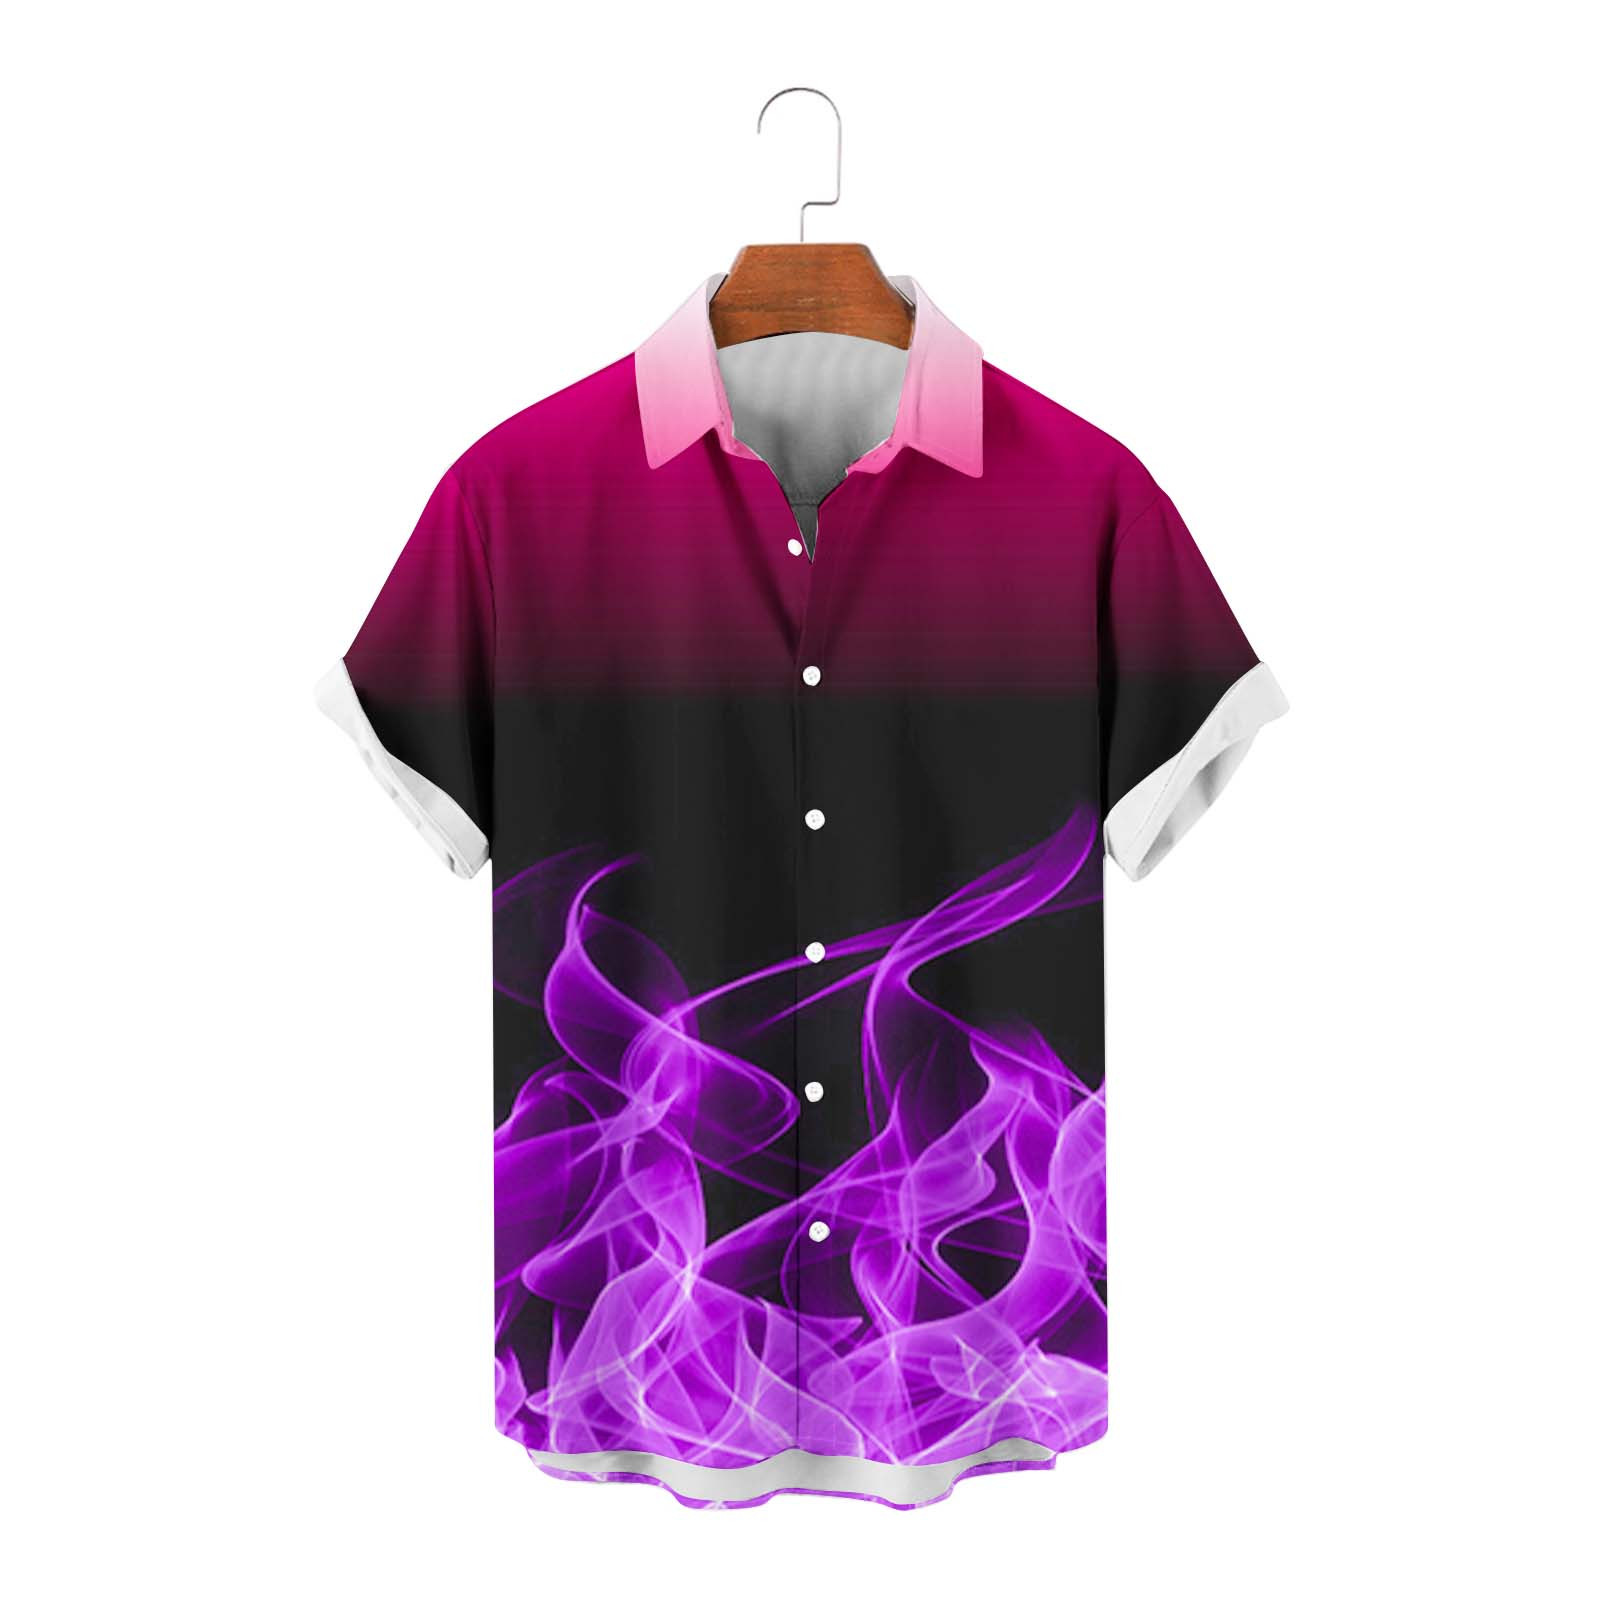 QIPOPIQ Men's Short Sleeve Turndown Collar Shirts Men 3D Fire Pattern Hawaiian Shirt Summer Fashion Printed Have Pockets Button Shirt Tops Tees Shirt Gift for Father & Him 2023 Deals Purple M - image 2 of 4